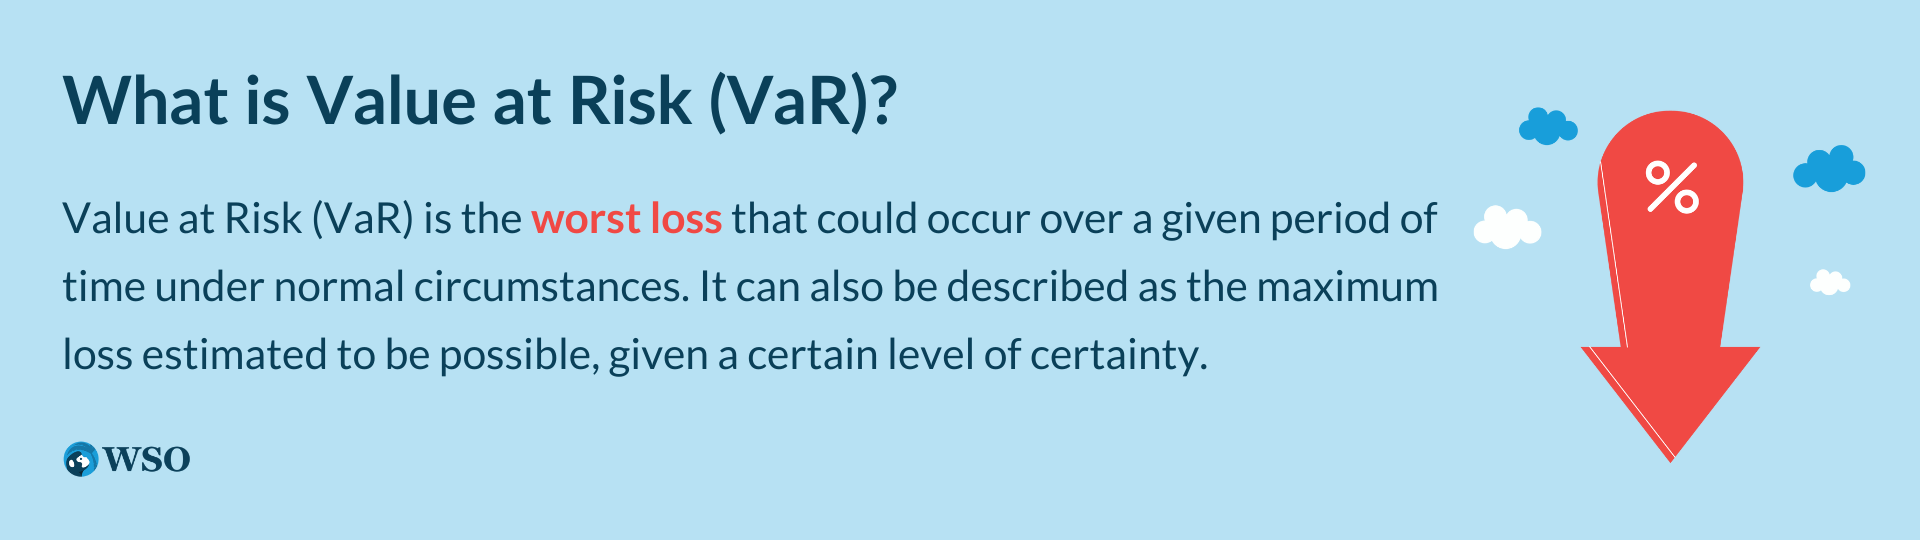 What is Value at Risk (VaR)?